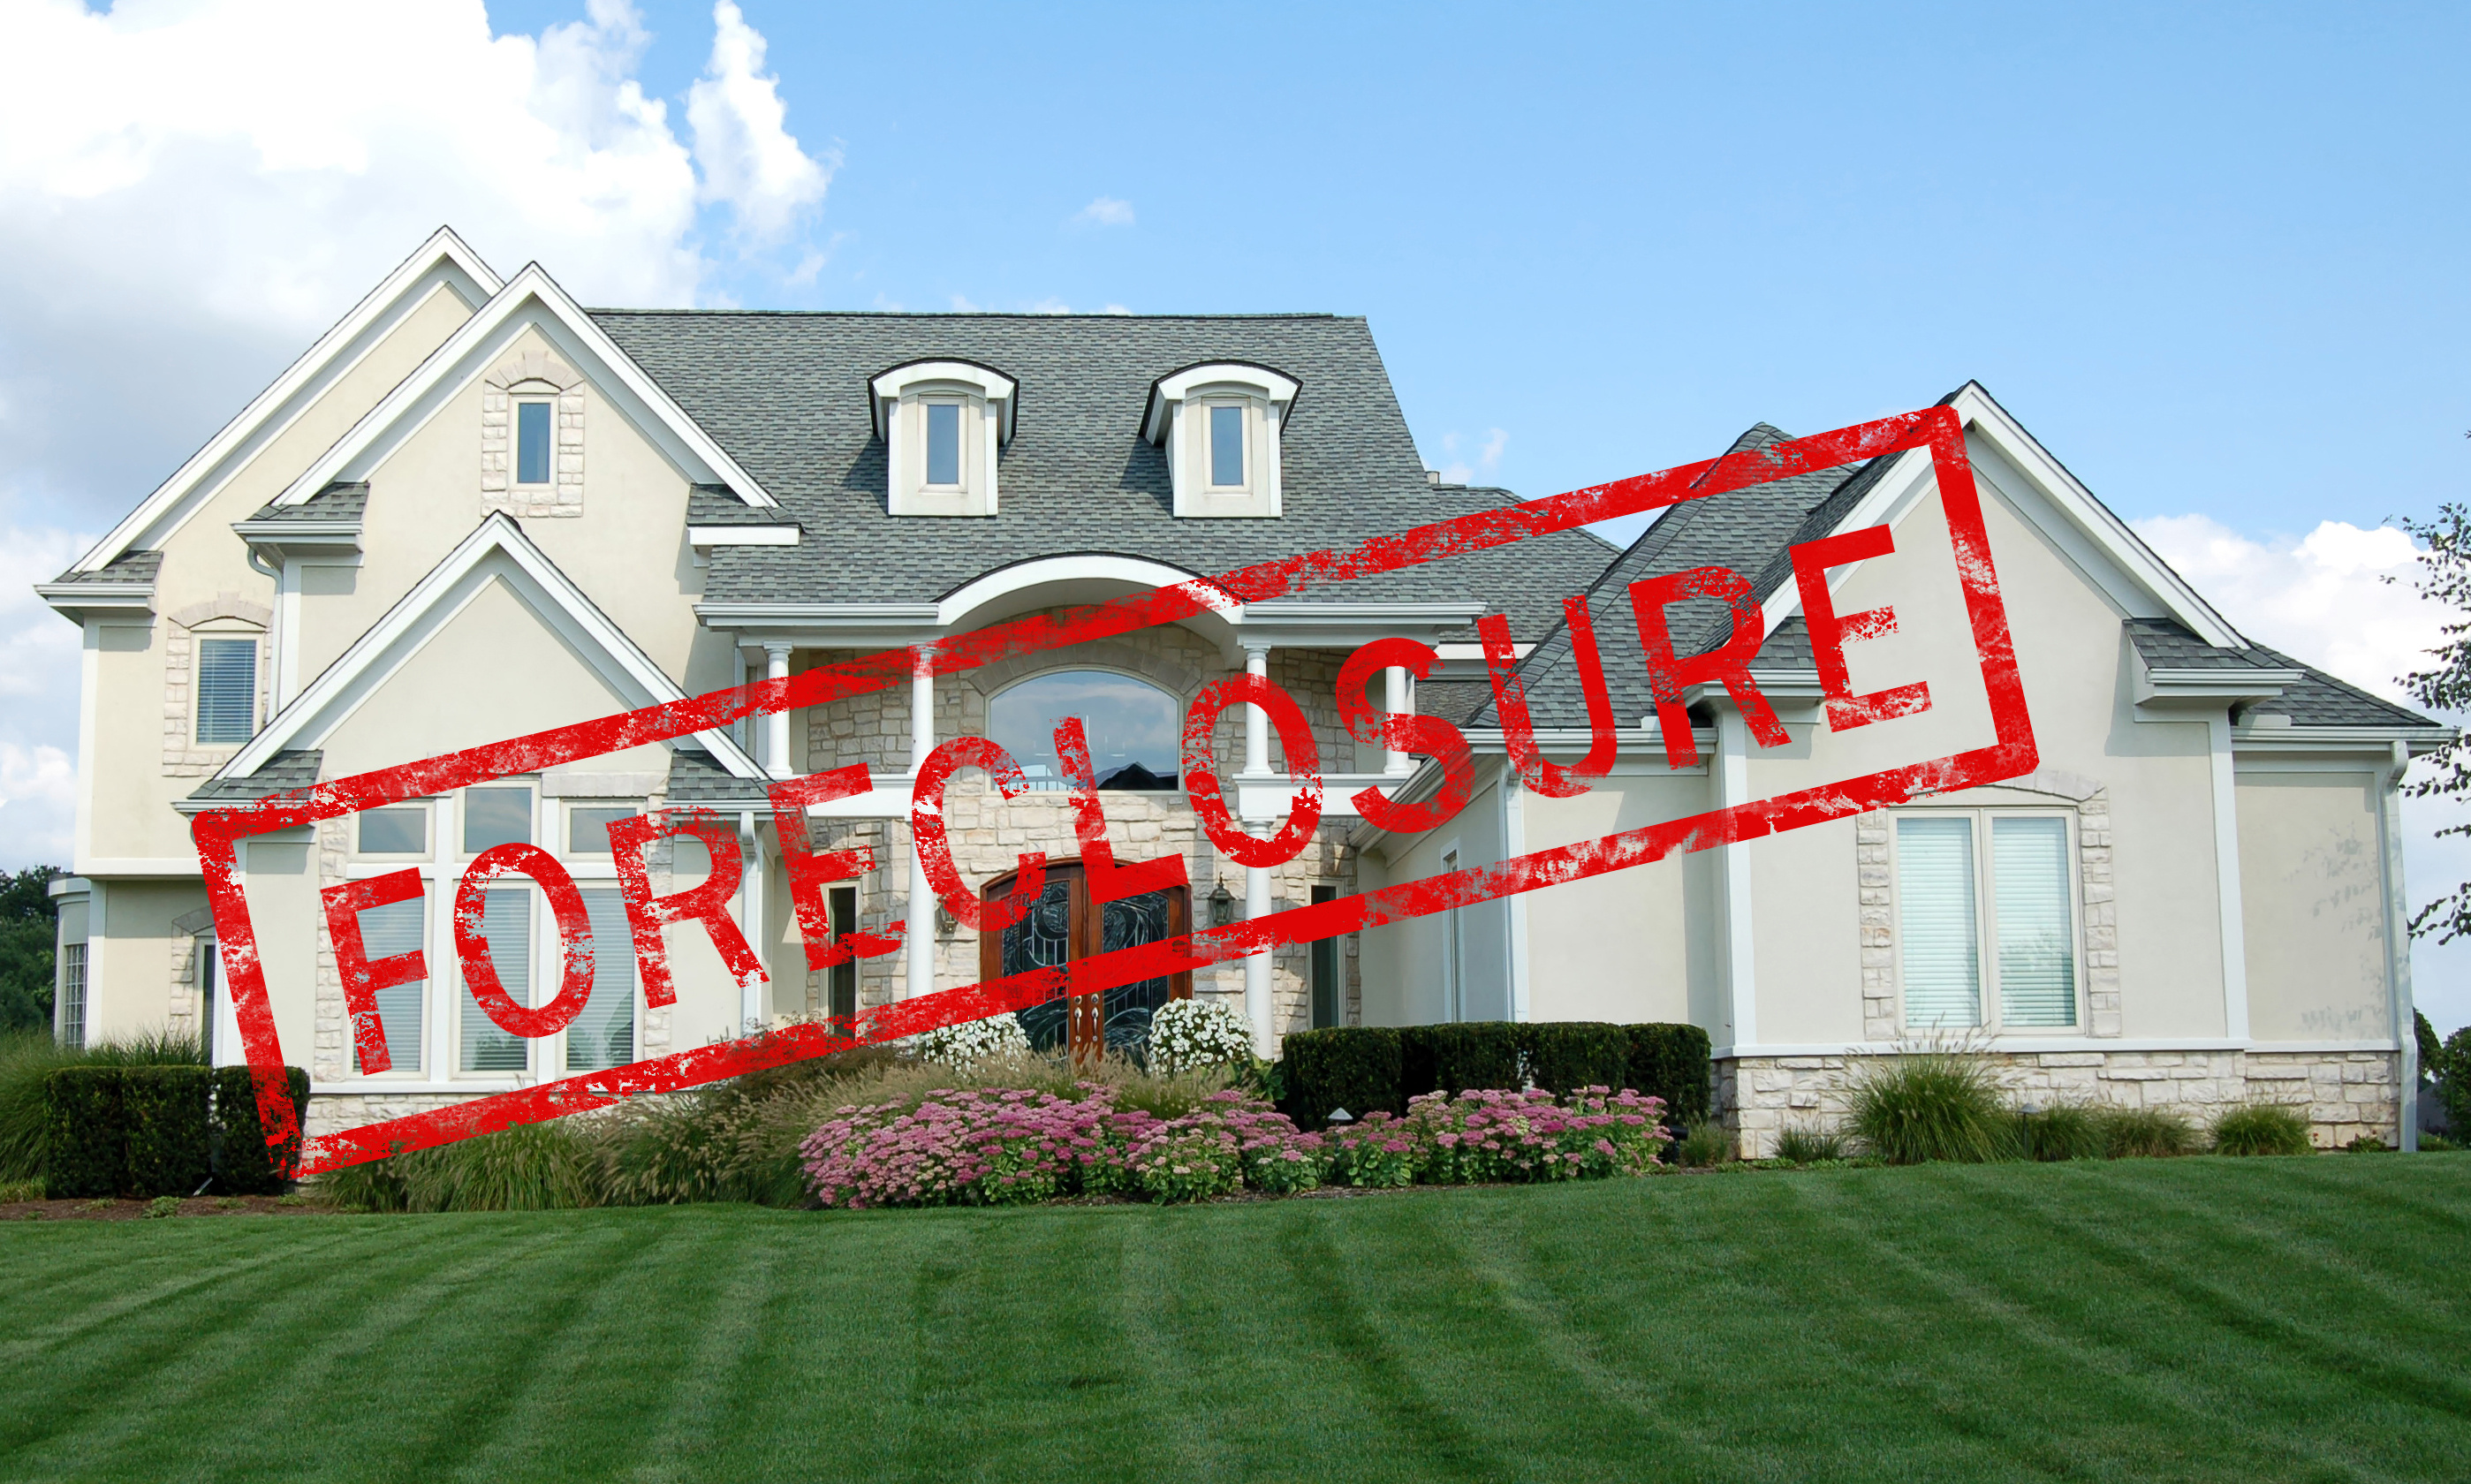 Call Hemet Appraisers to discuss appraisals regarding Riverside foreclosures